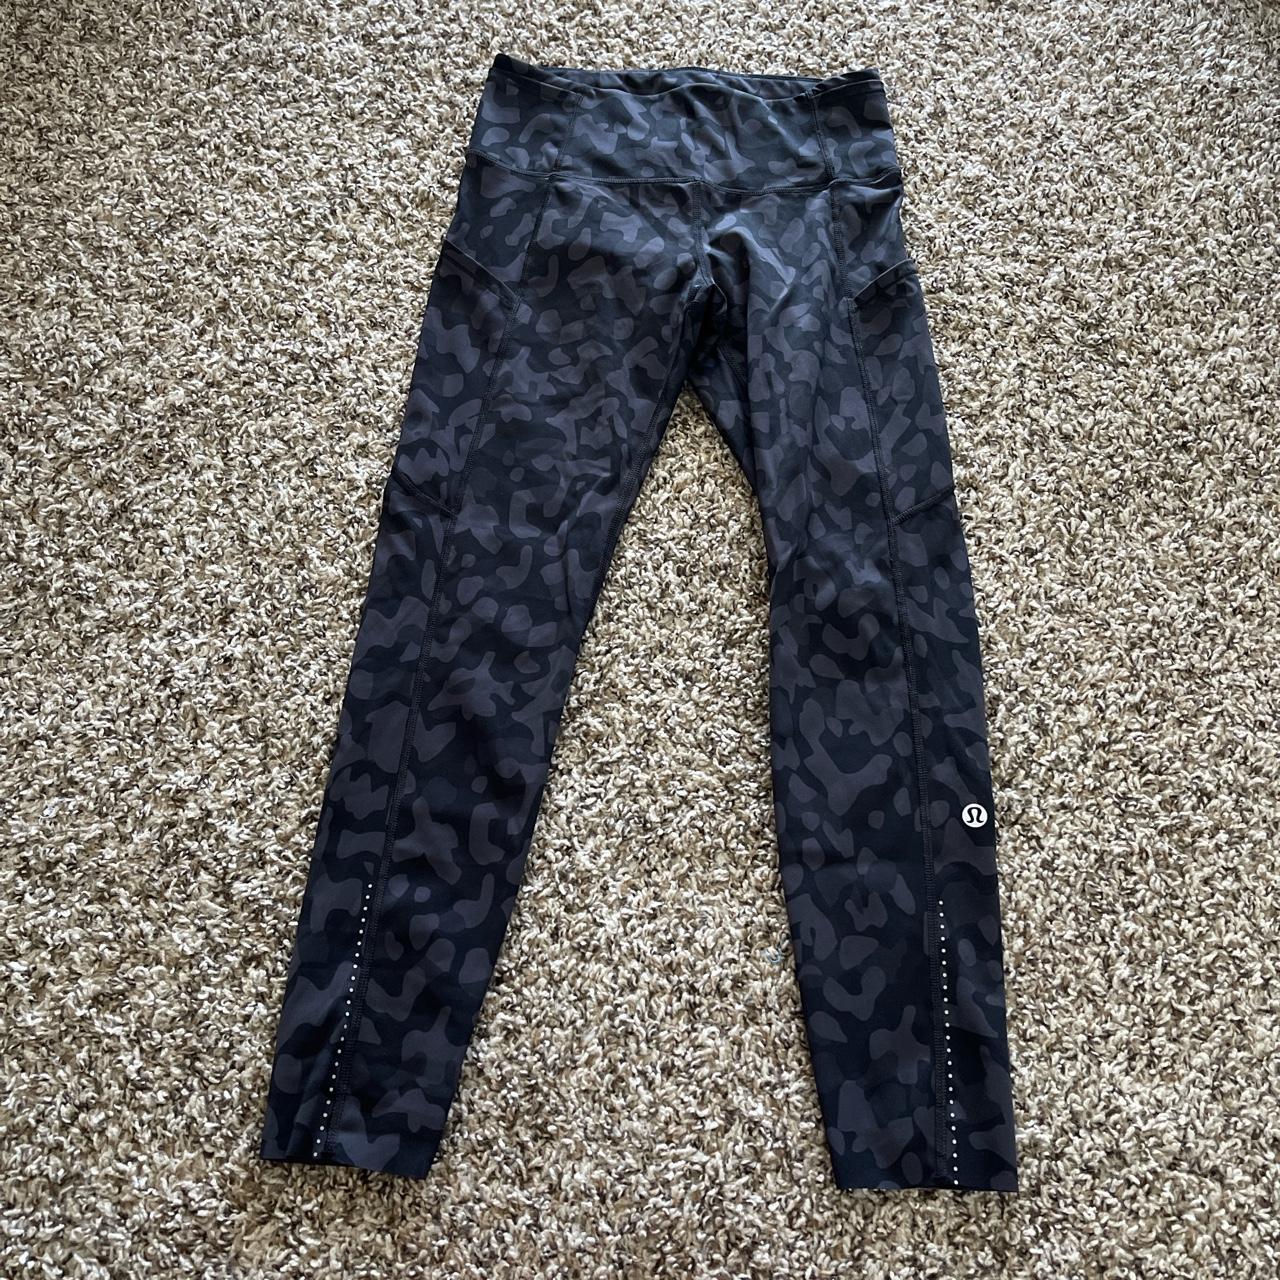 Lululemon leggings reflective patterned black Size 4 